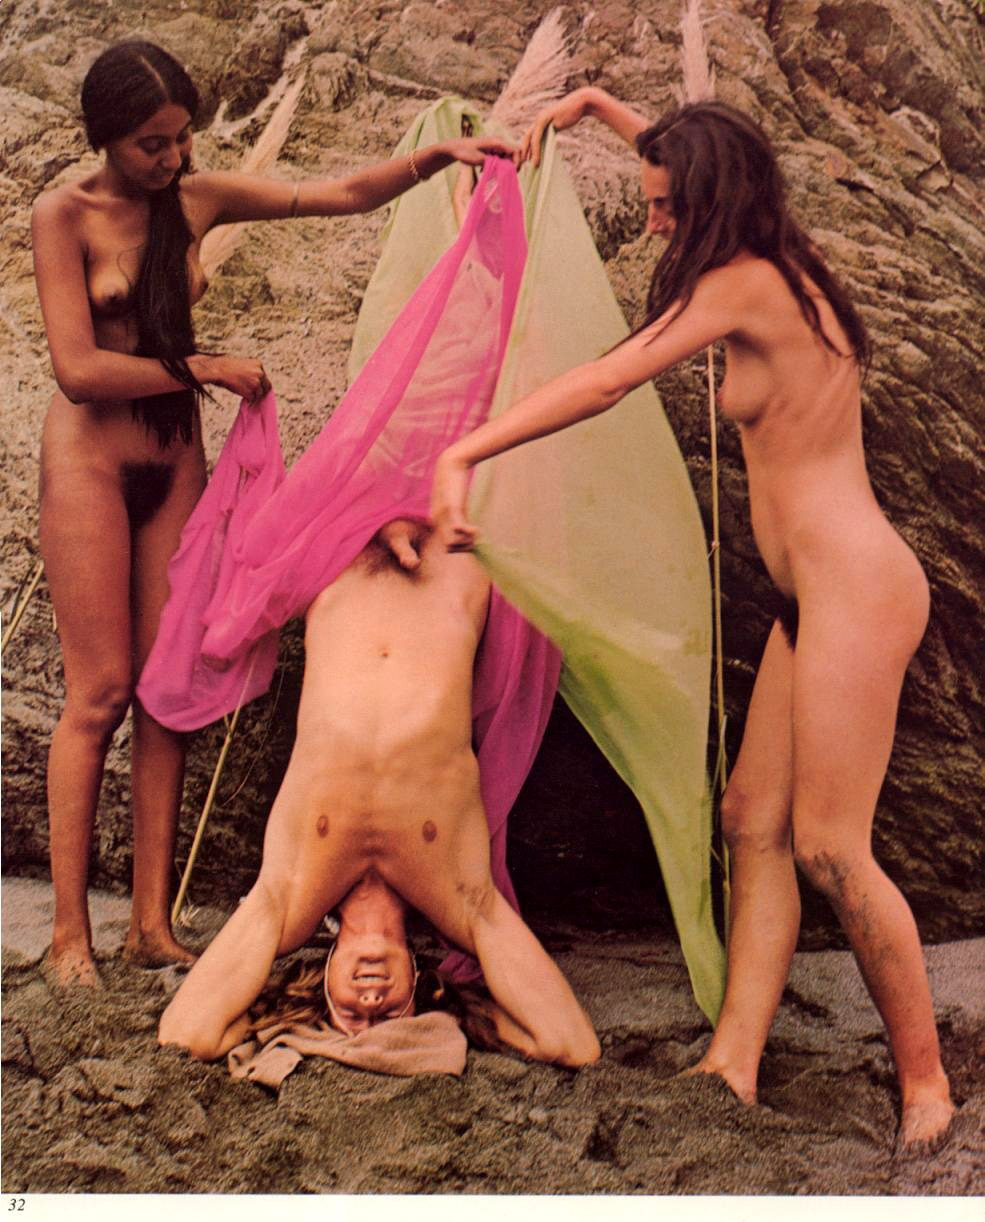 Nudist fun pure nudism family